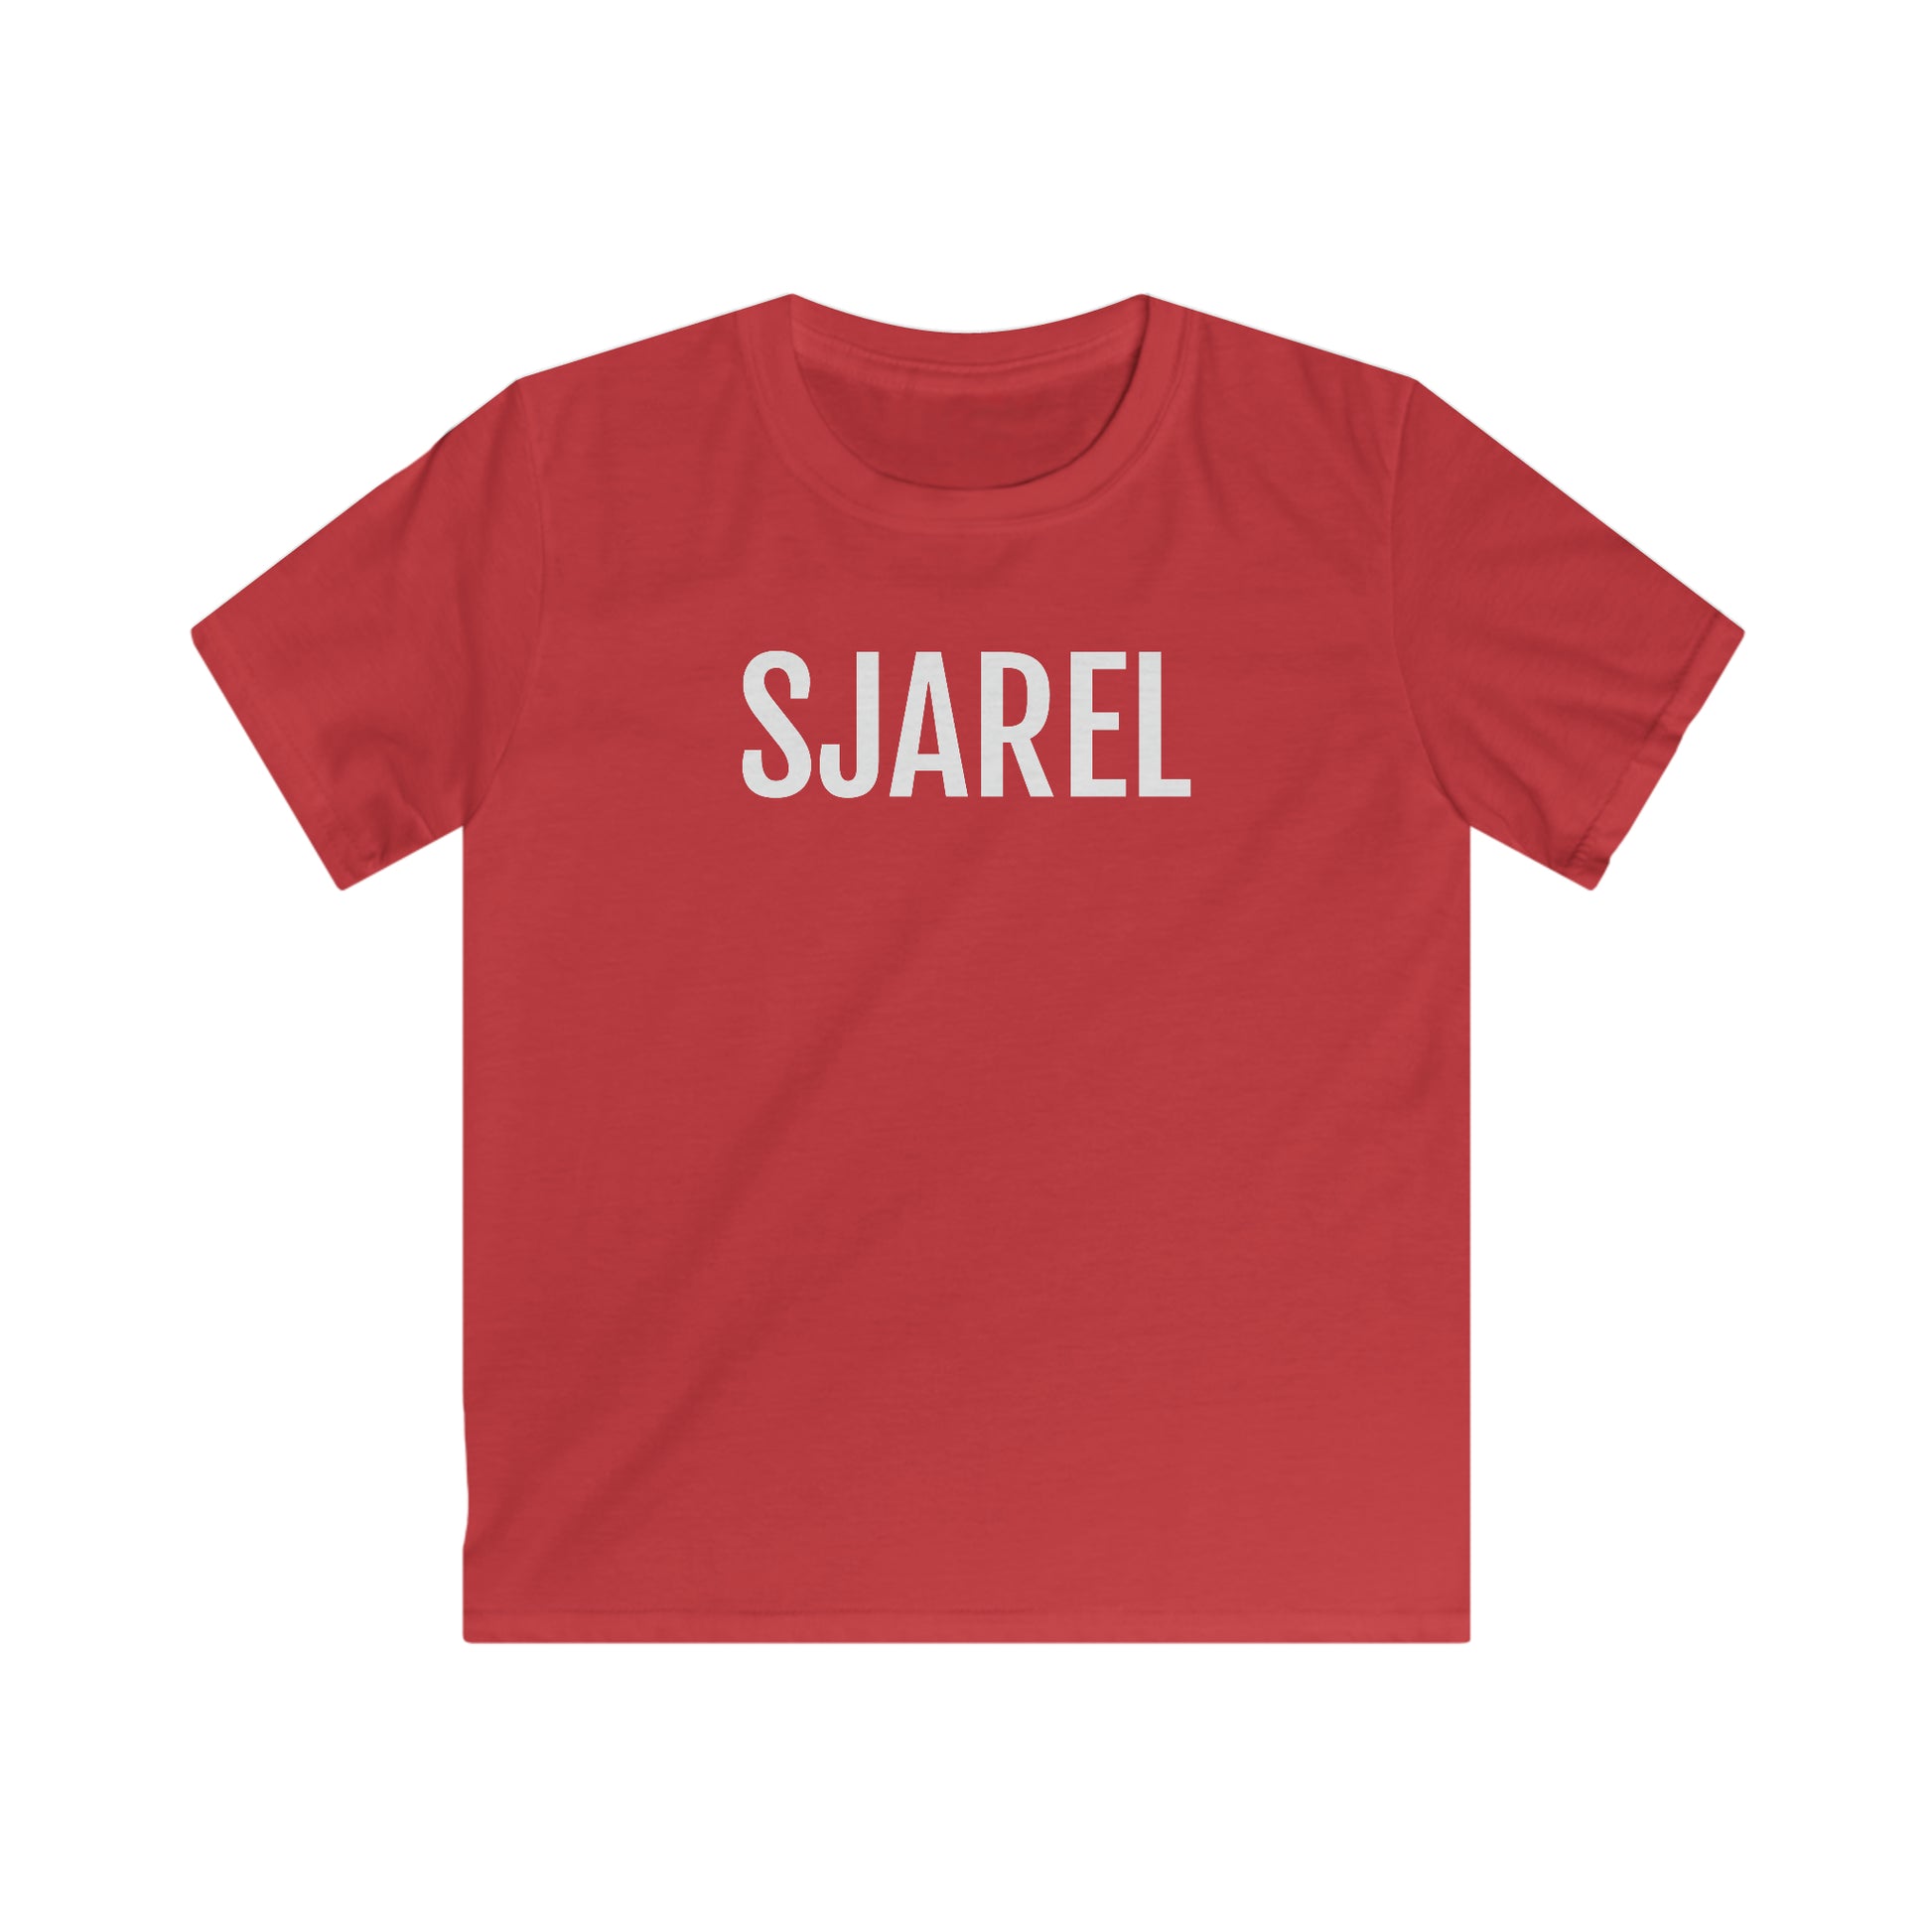 Antwerps Sjarel kinder t-shirt Design in Rood - Unisex